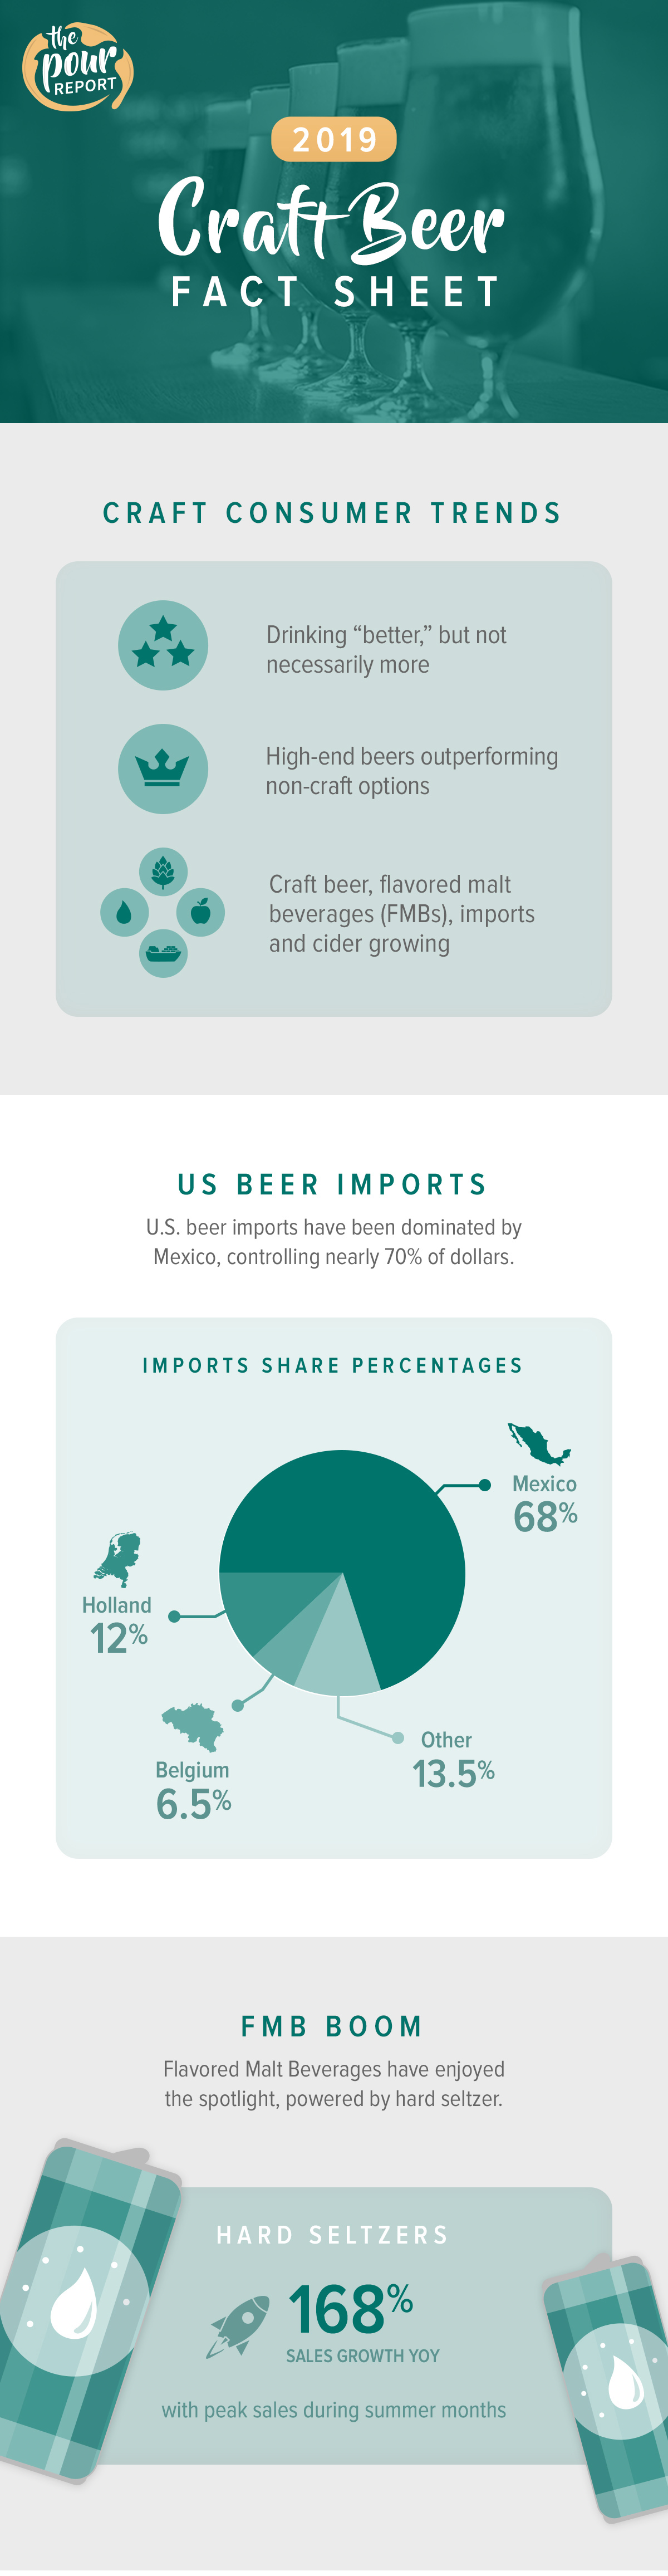 2019 craft beer fact sheet infographic